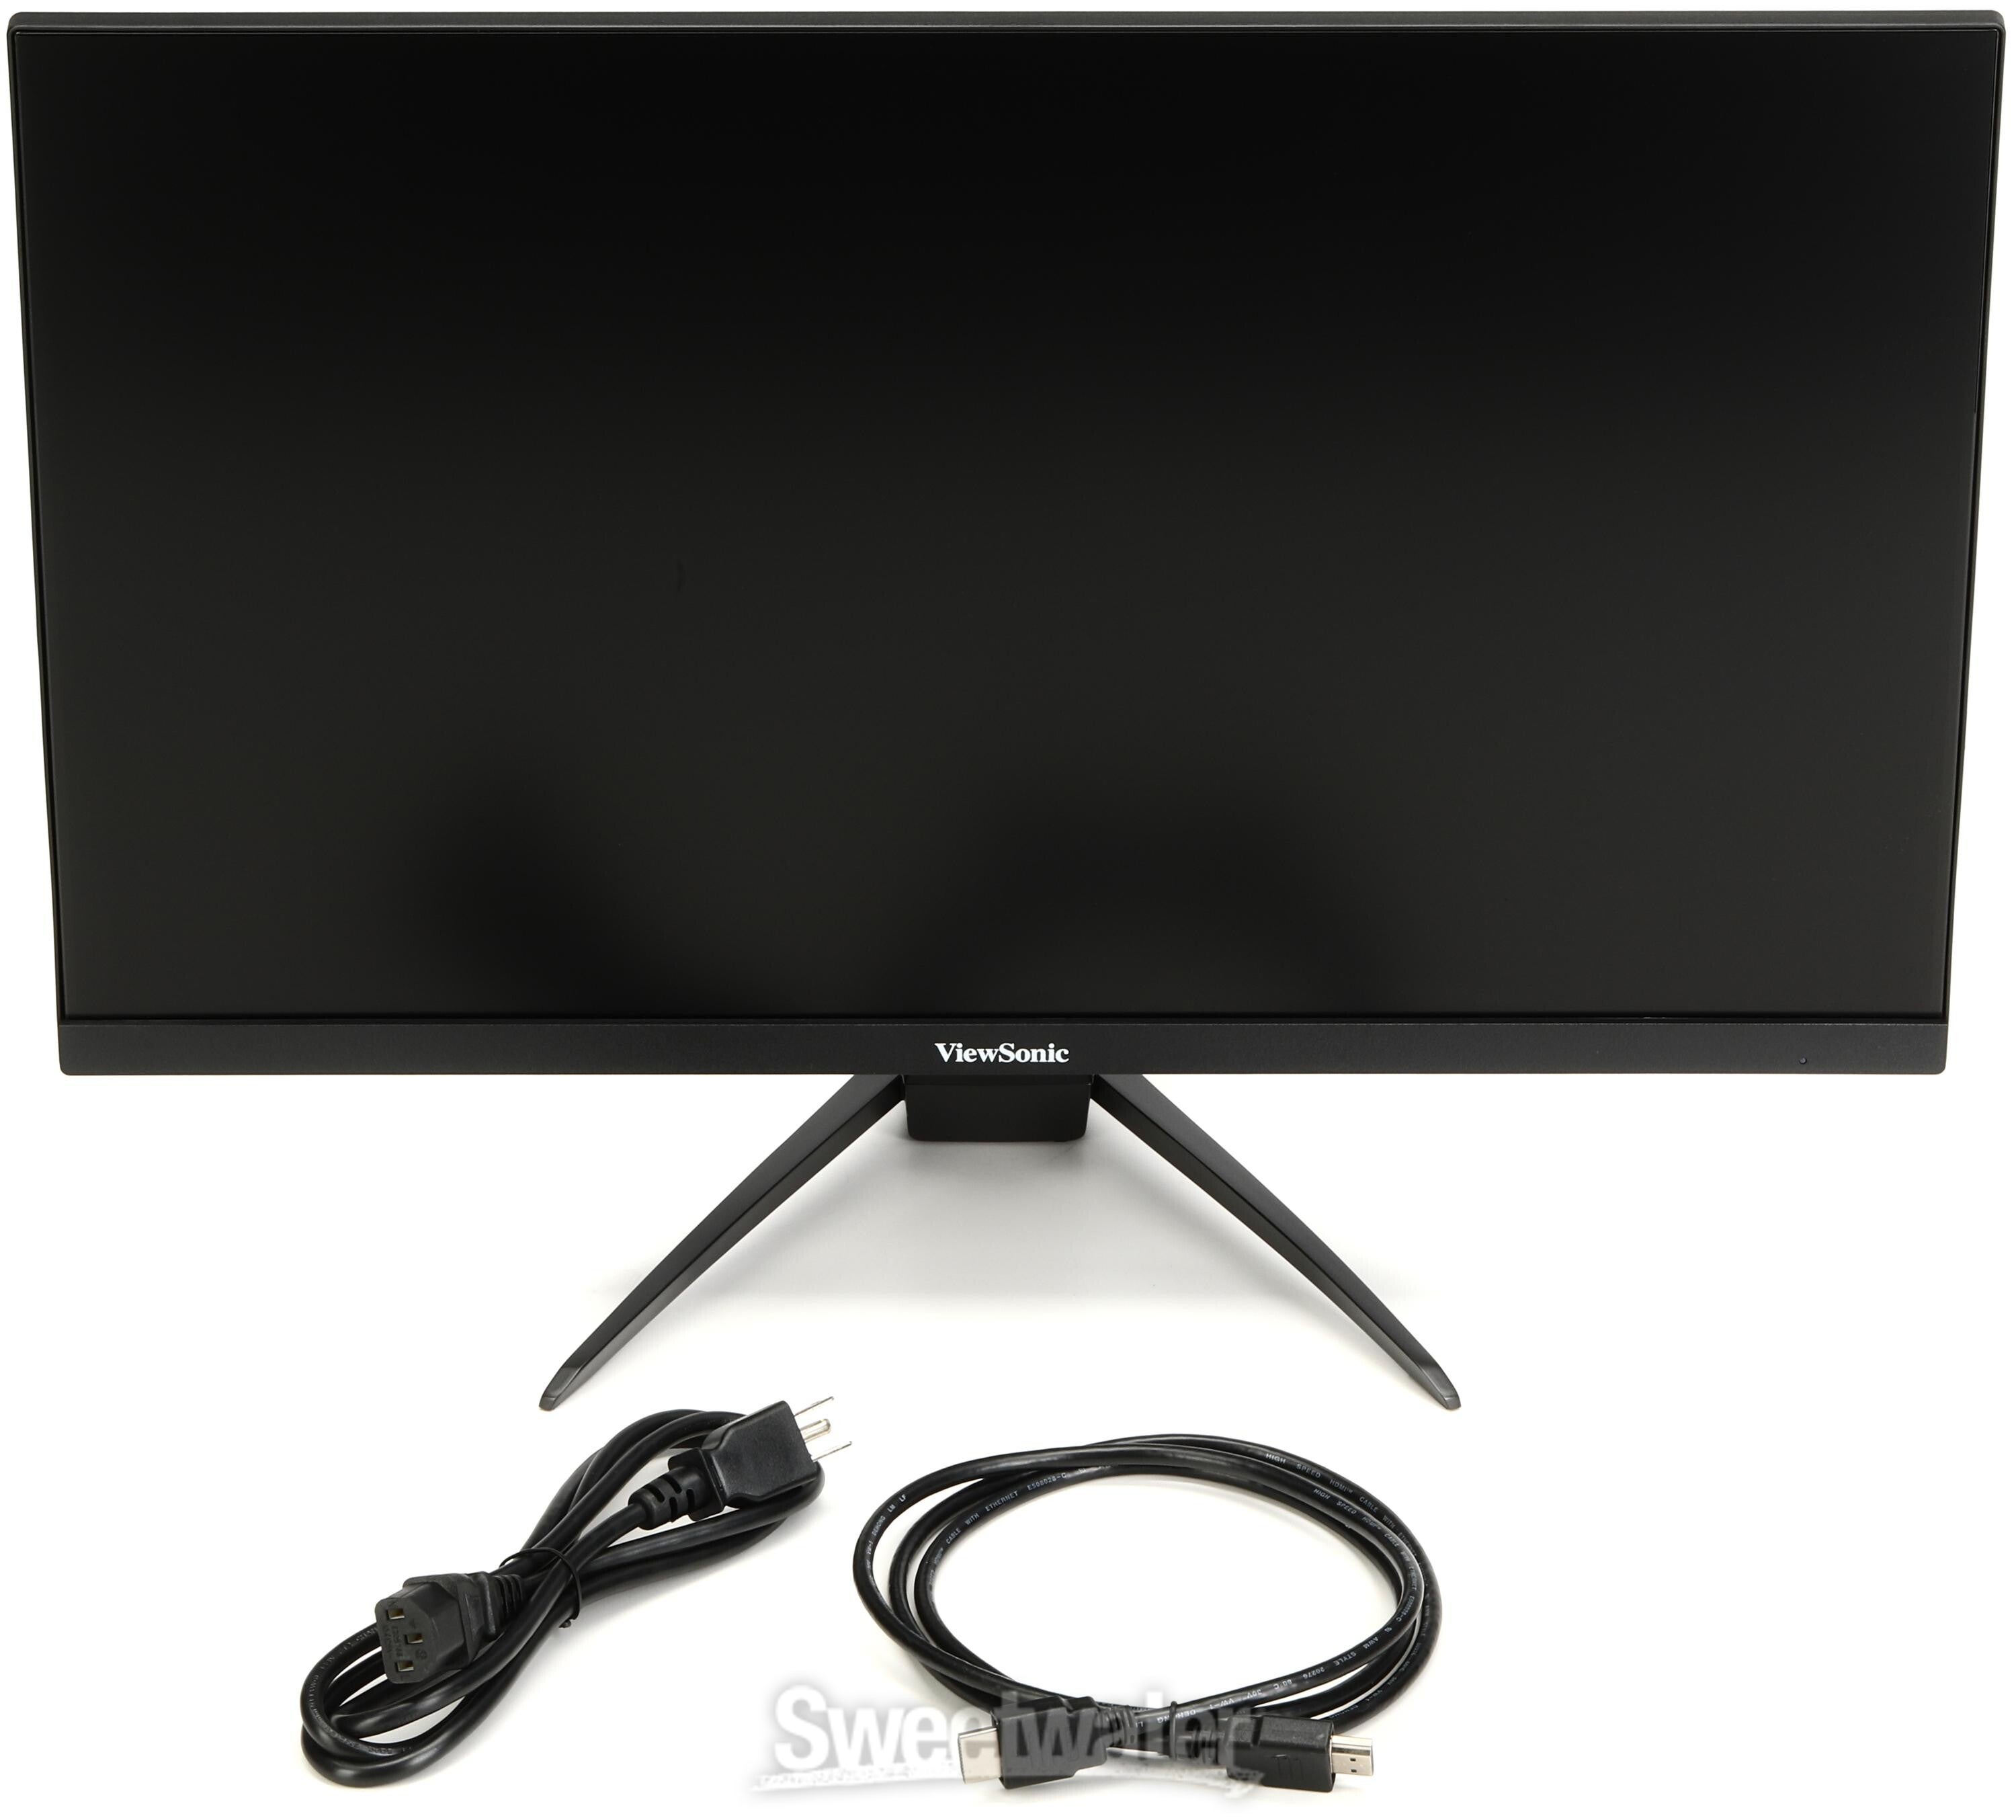 Viewsonic VX2467-mhd 24-inch Full HD Monitor | Sweetwater